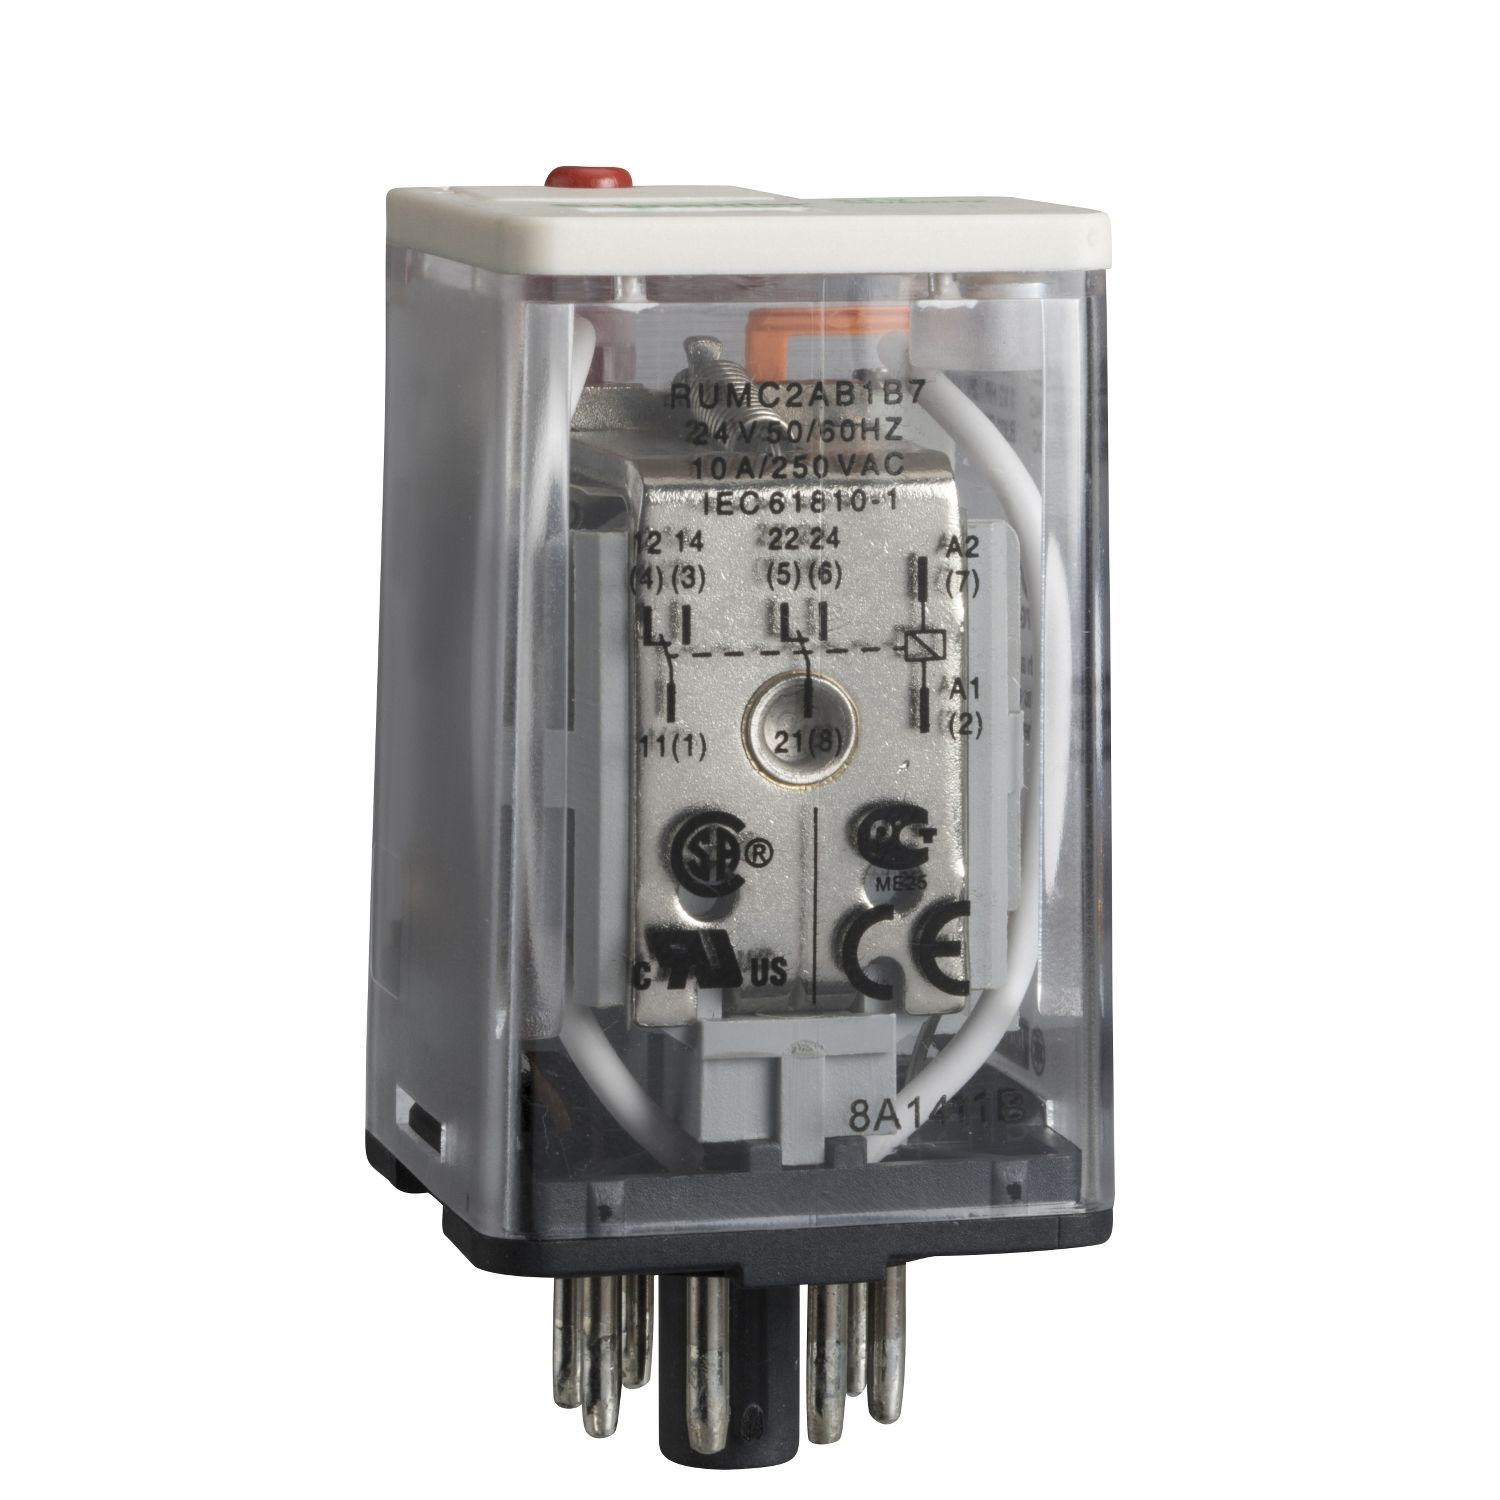 RUMC2AB1P7 universal plug-in relay - Harmony RUM - 2 C/O - 230 V AC - 10 A